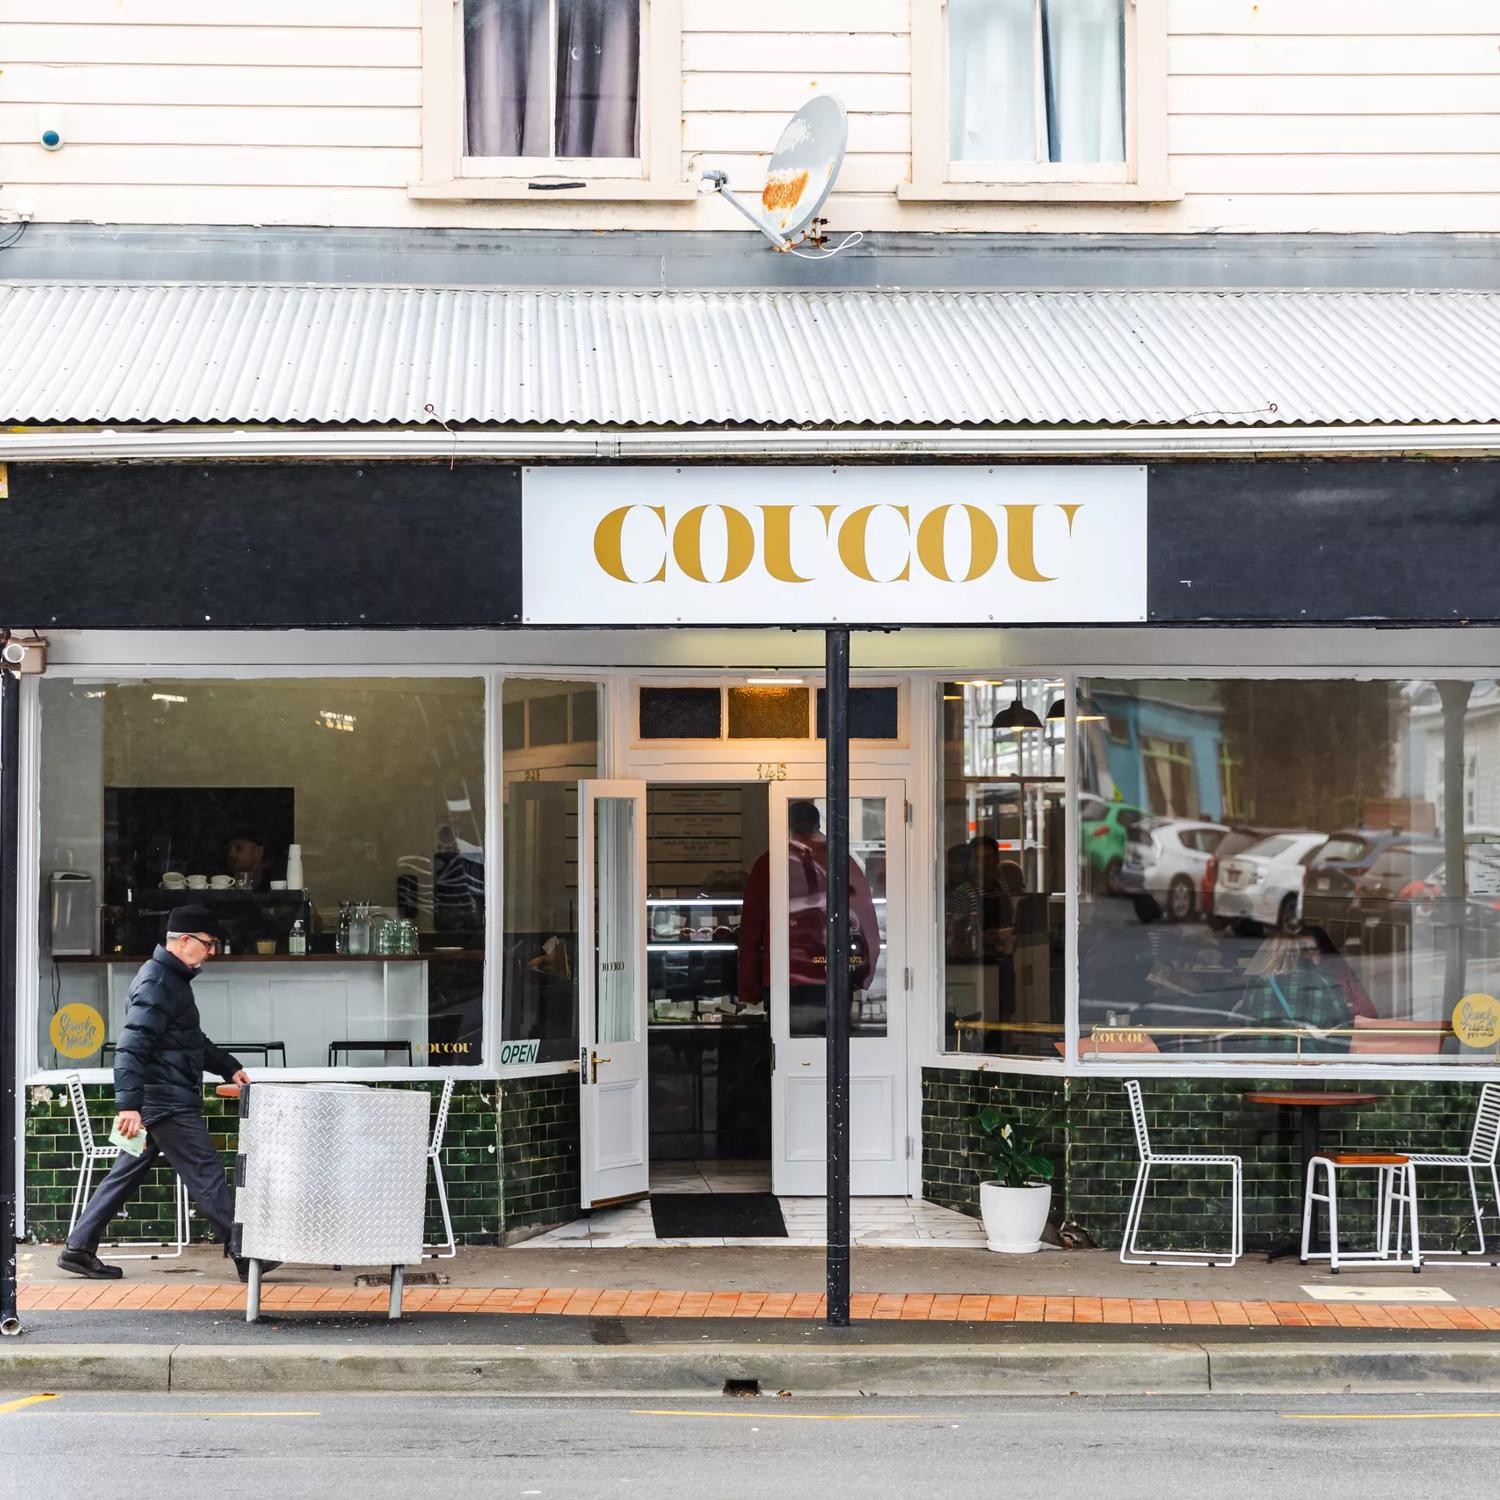 The front exterior of Coucou café, Island Bay.